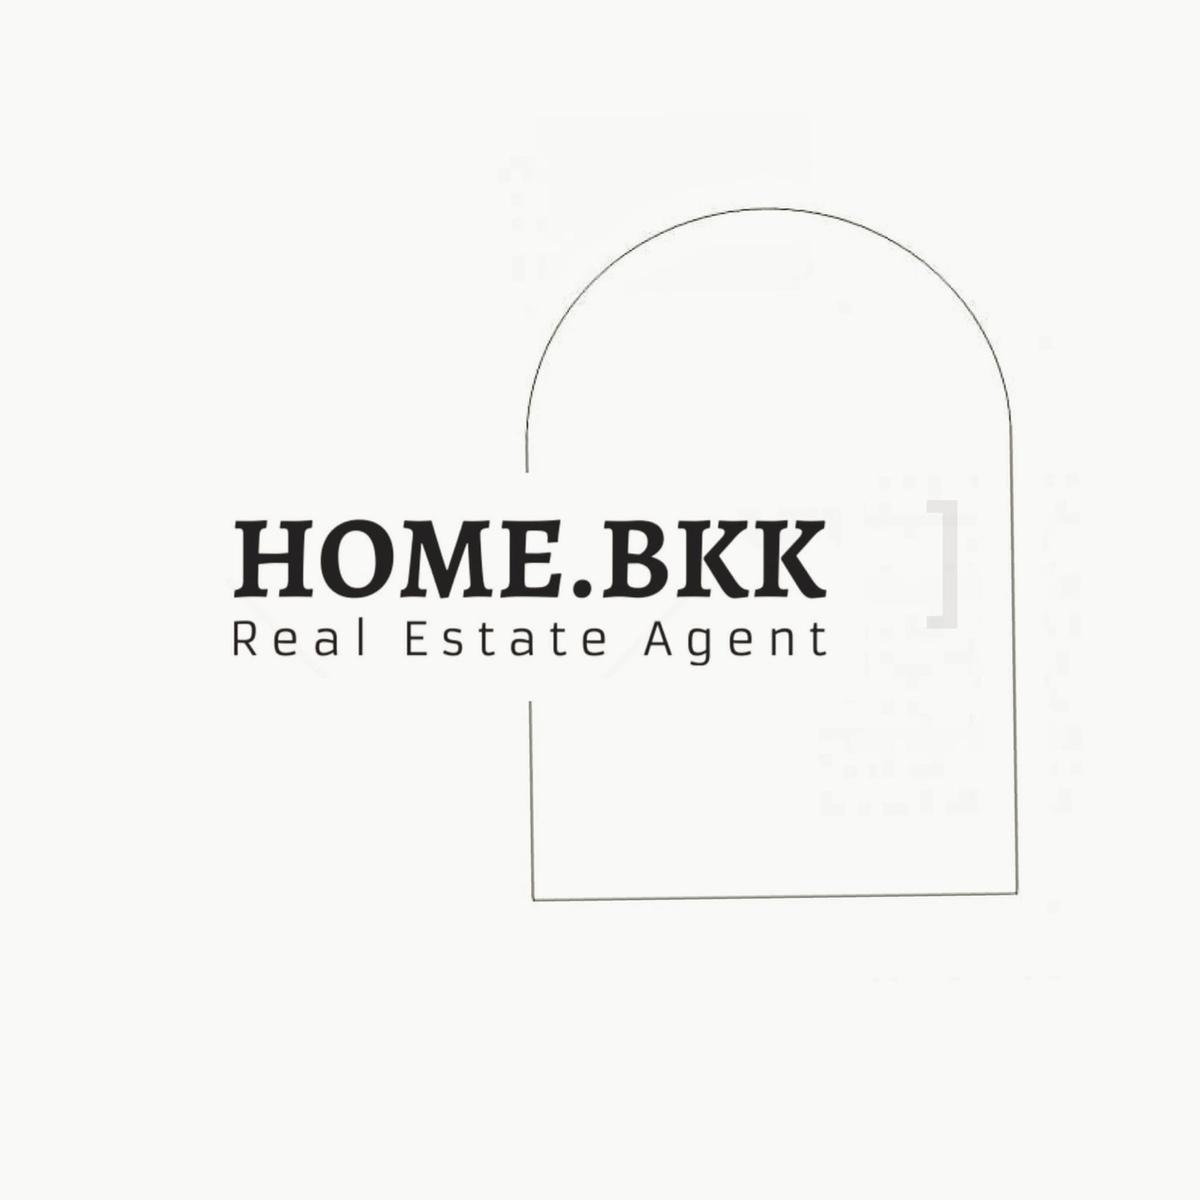 HOME • BKK